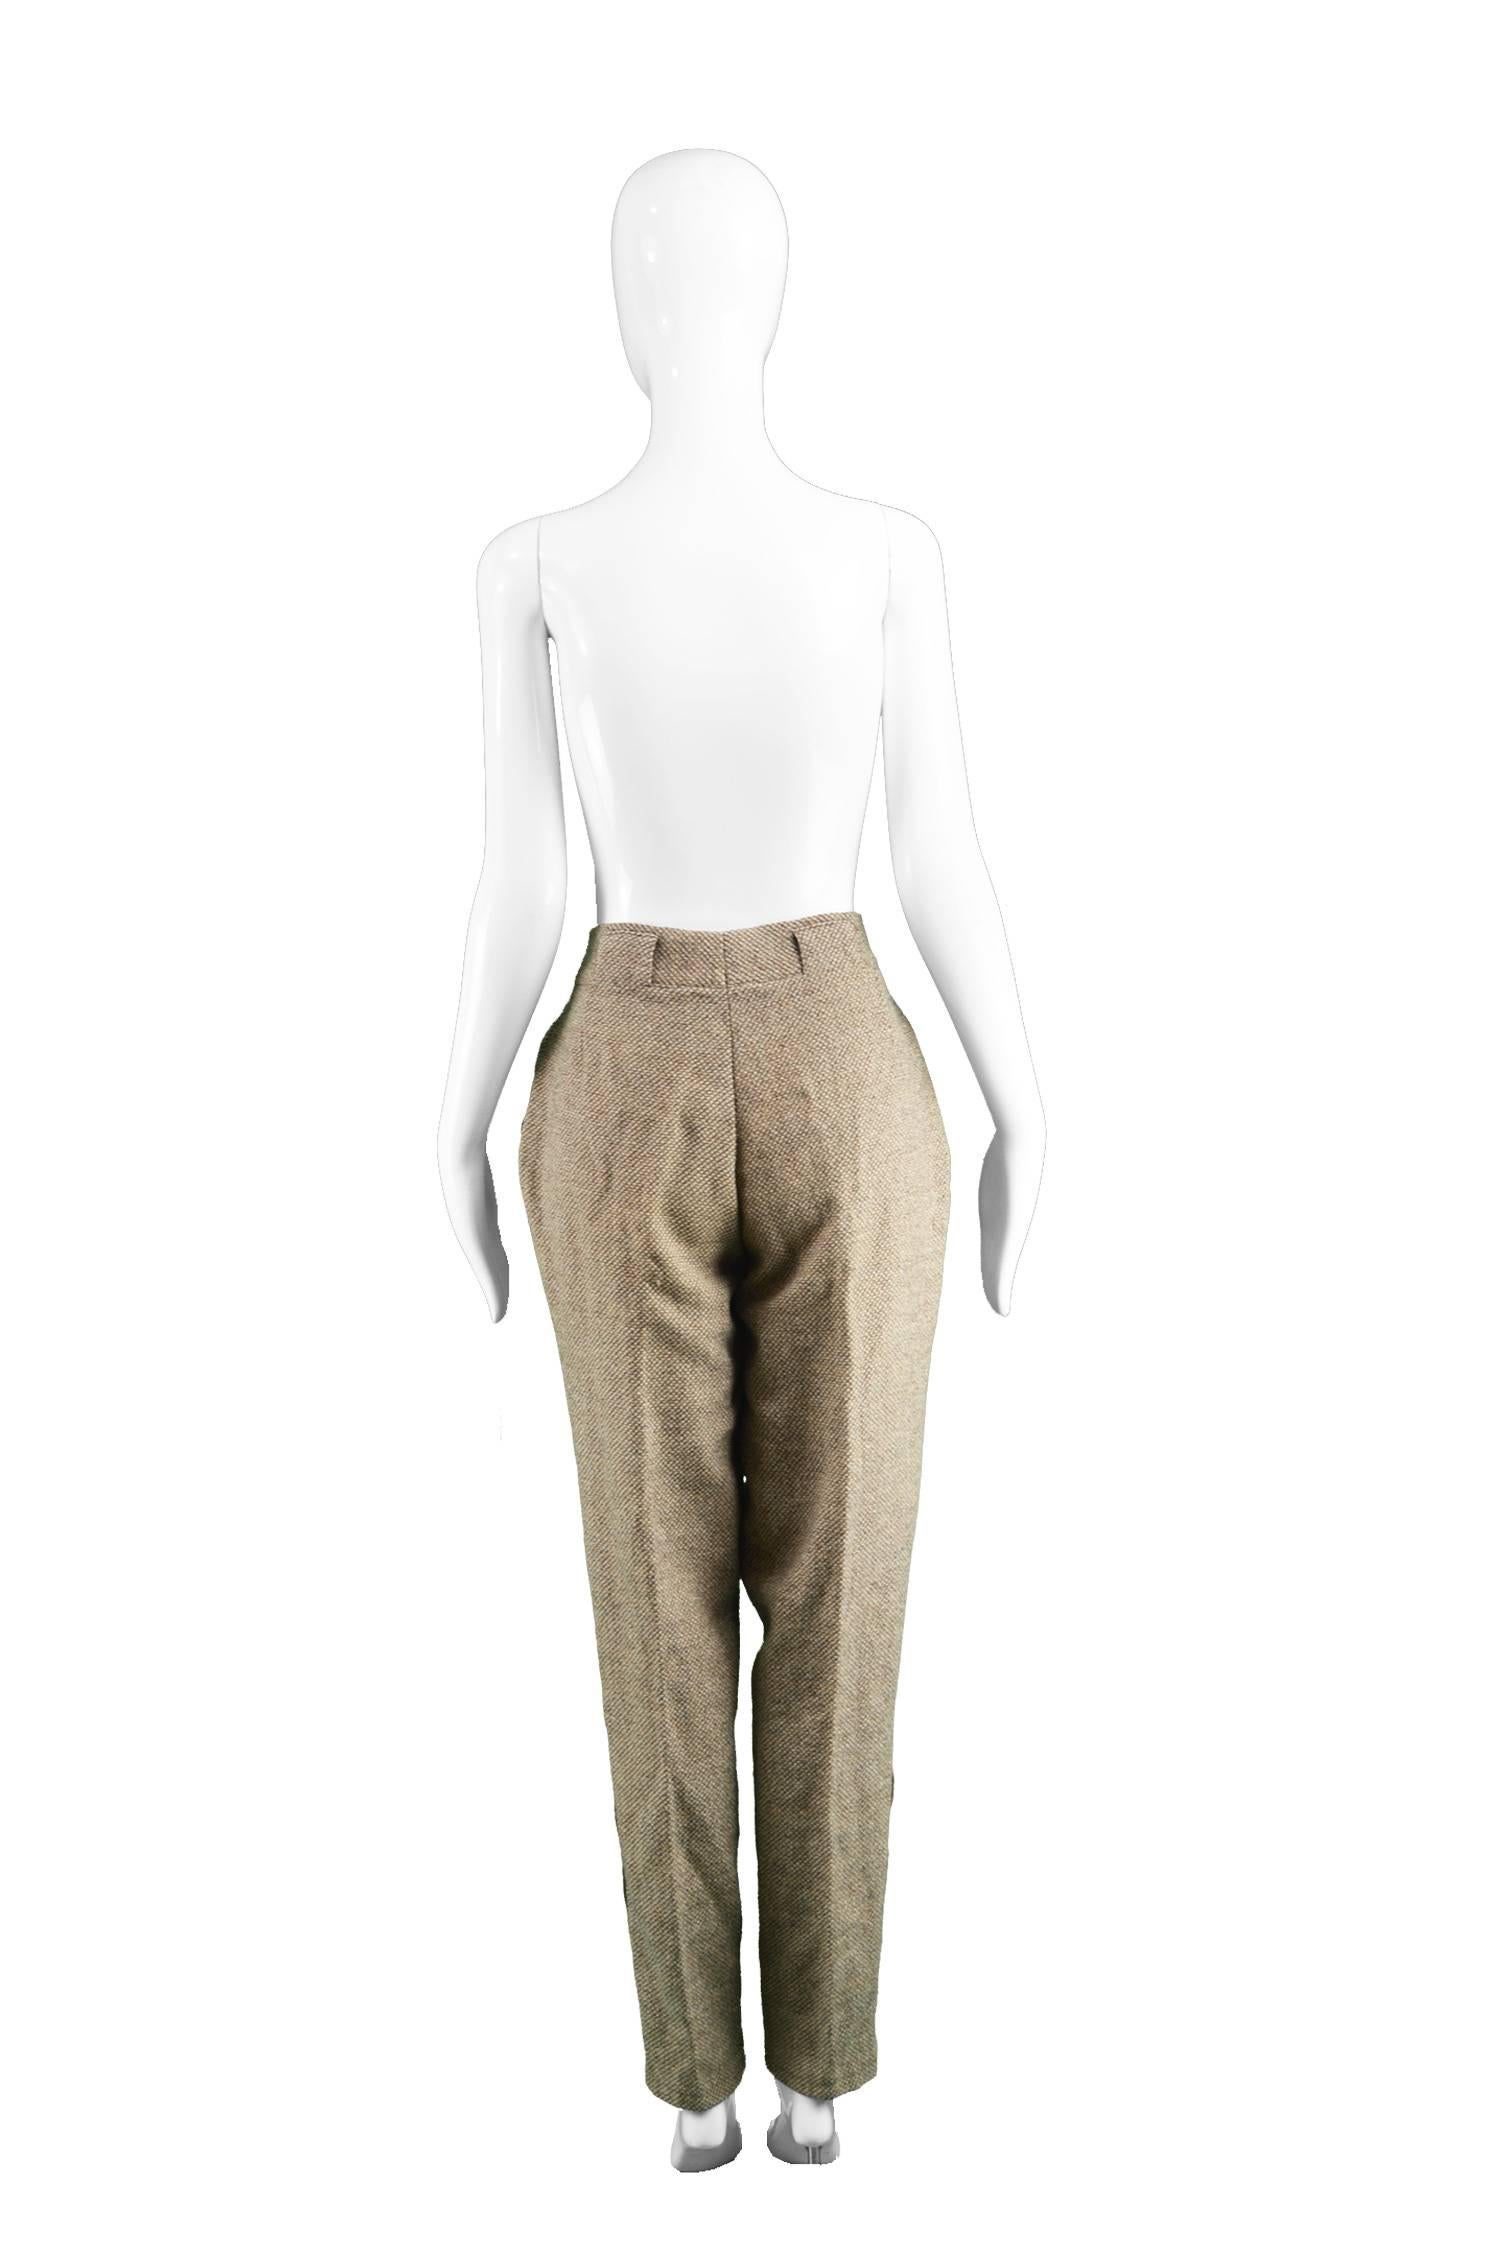 Gianni Versace Vintage Light Brown Tweed Tapered Leg Jodhpur Pants, 1980s 4